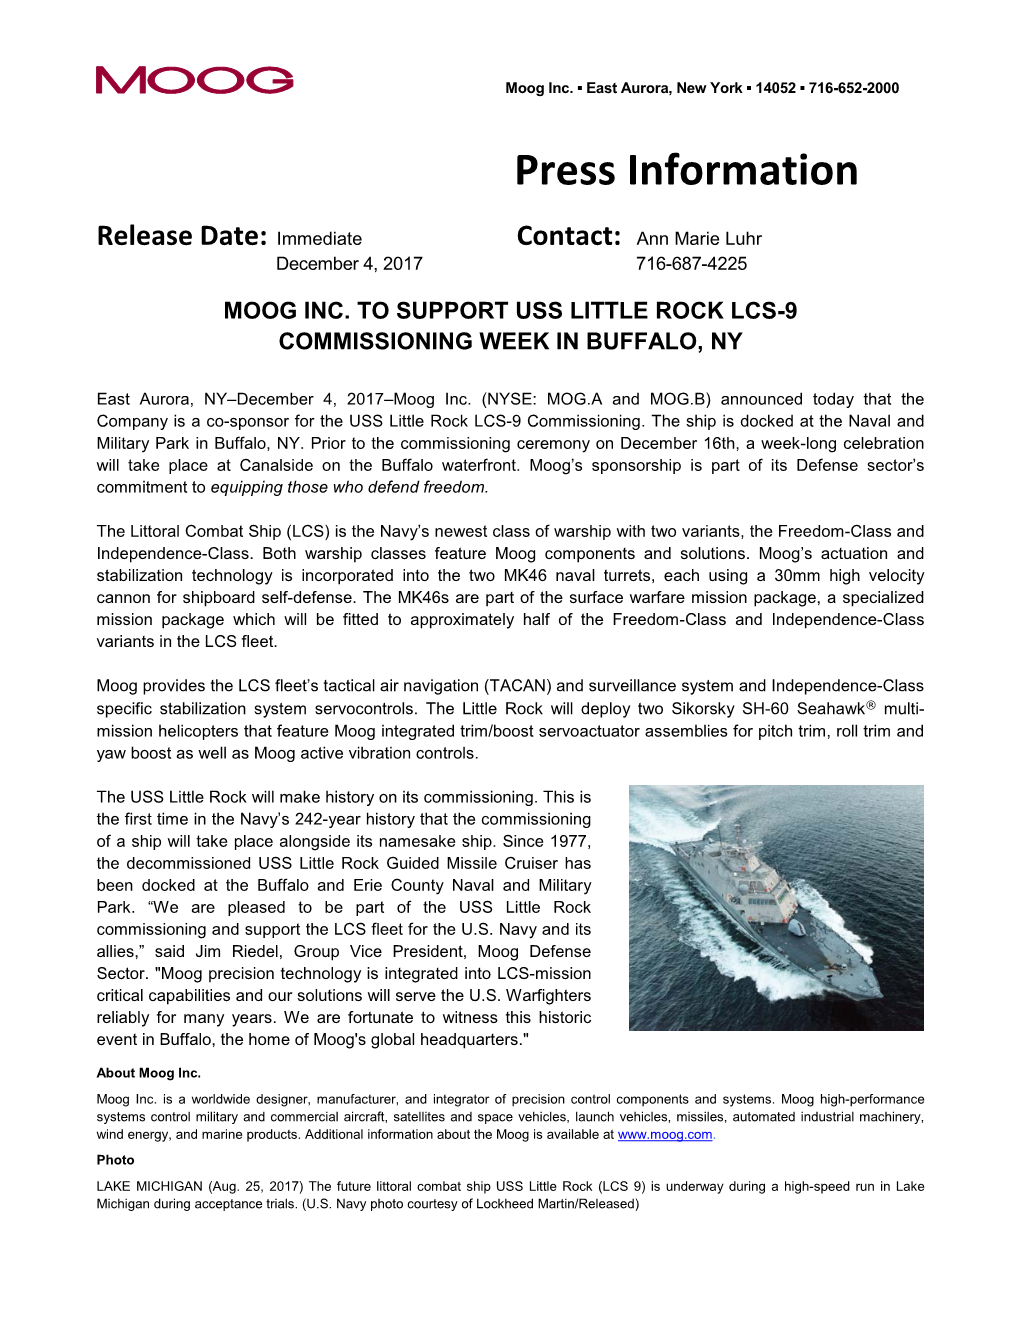 USS Little Rock Commissioning Press Release